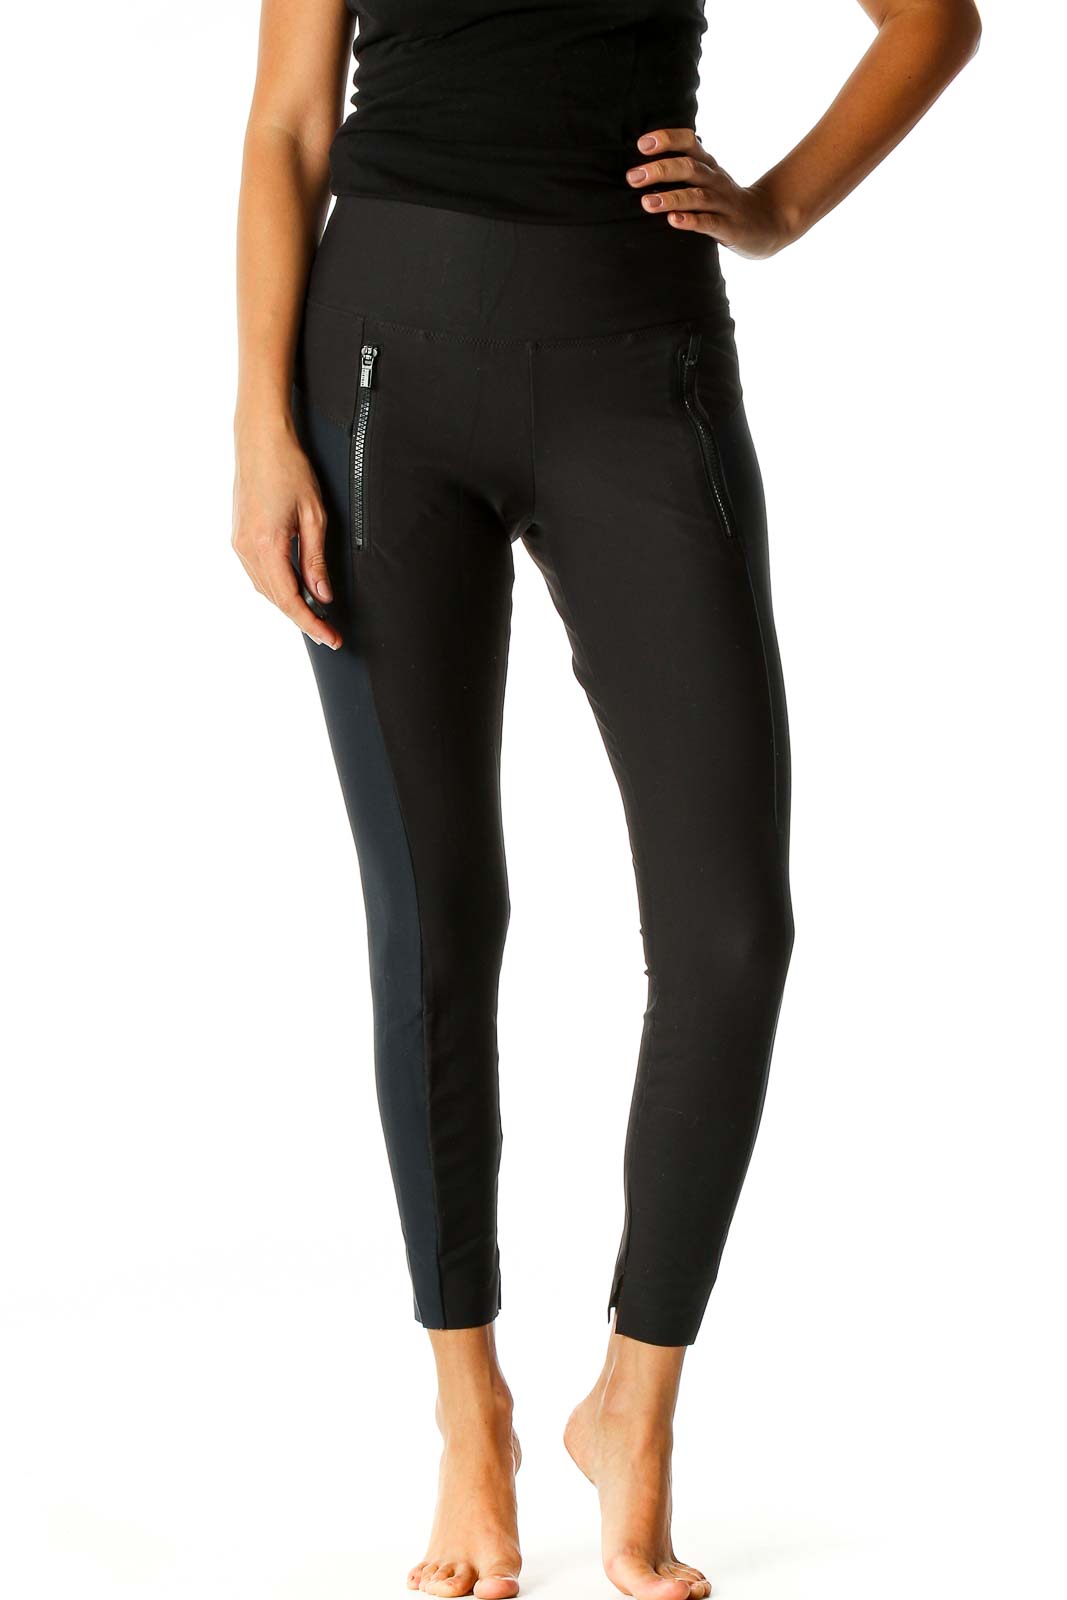 Athleta - Black Solid Casual Leggings Nylon Lycra ® Spandex